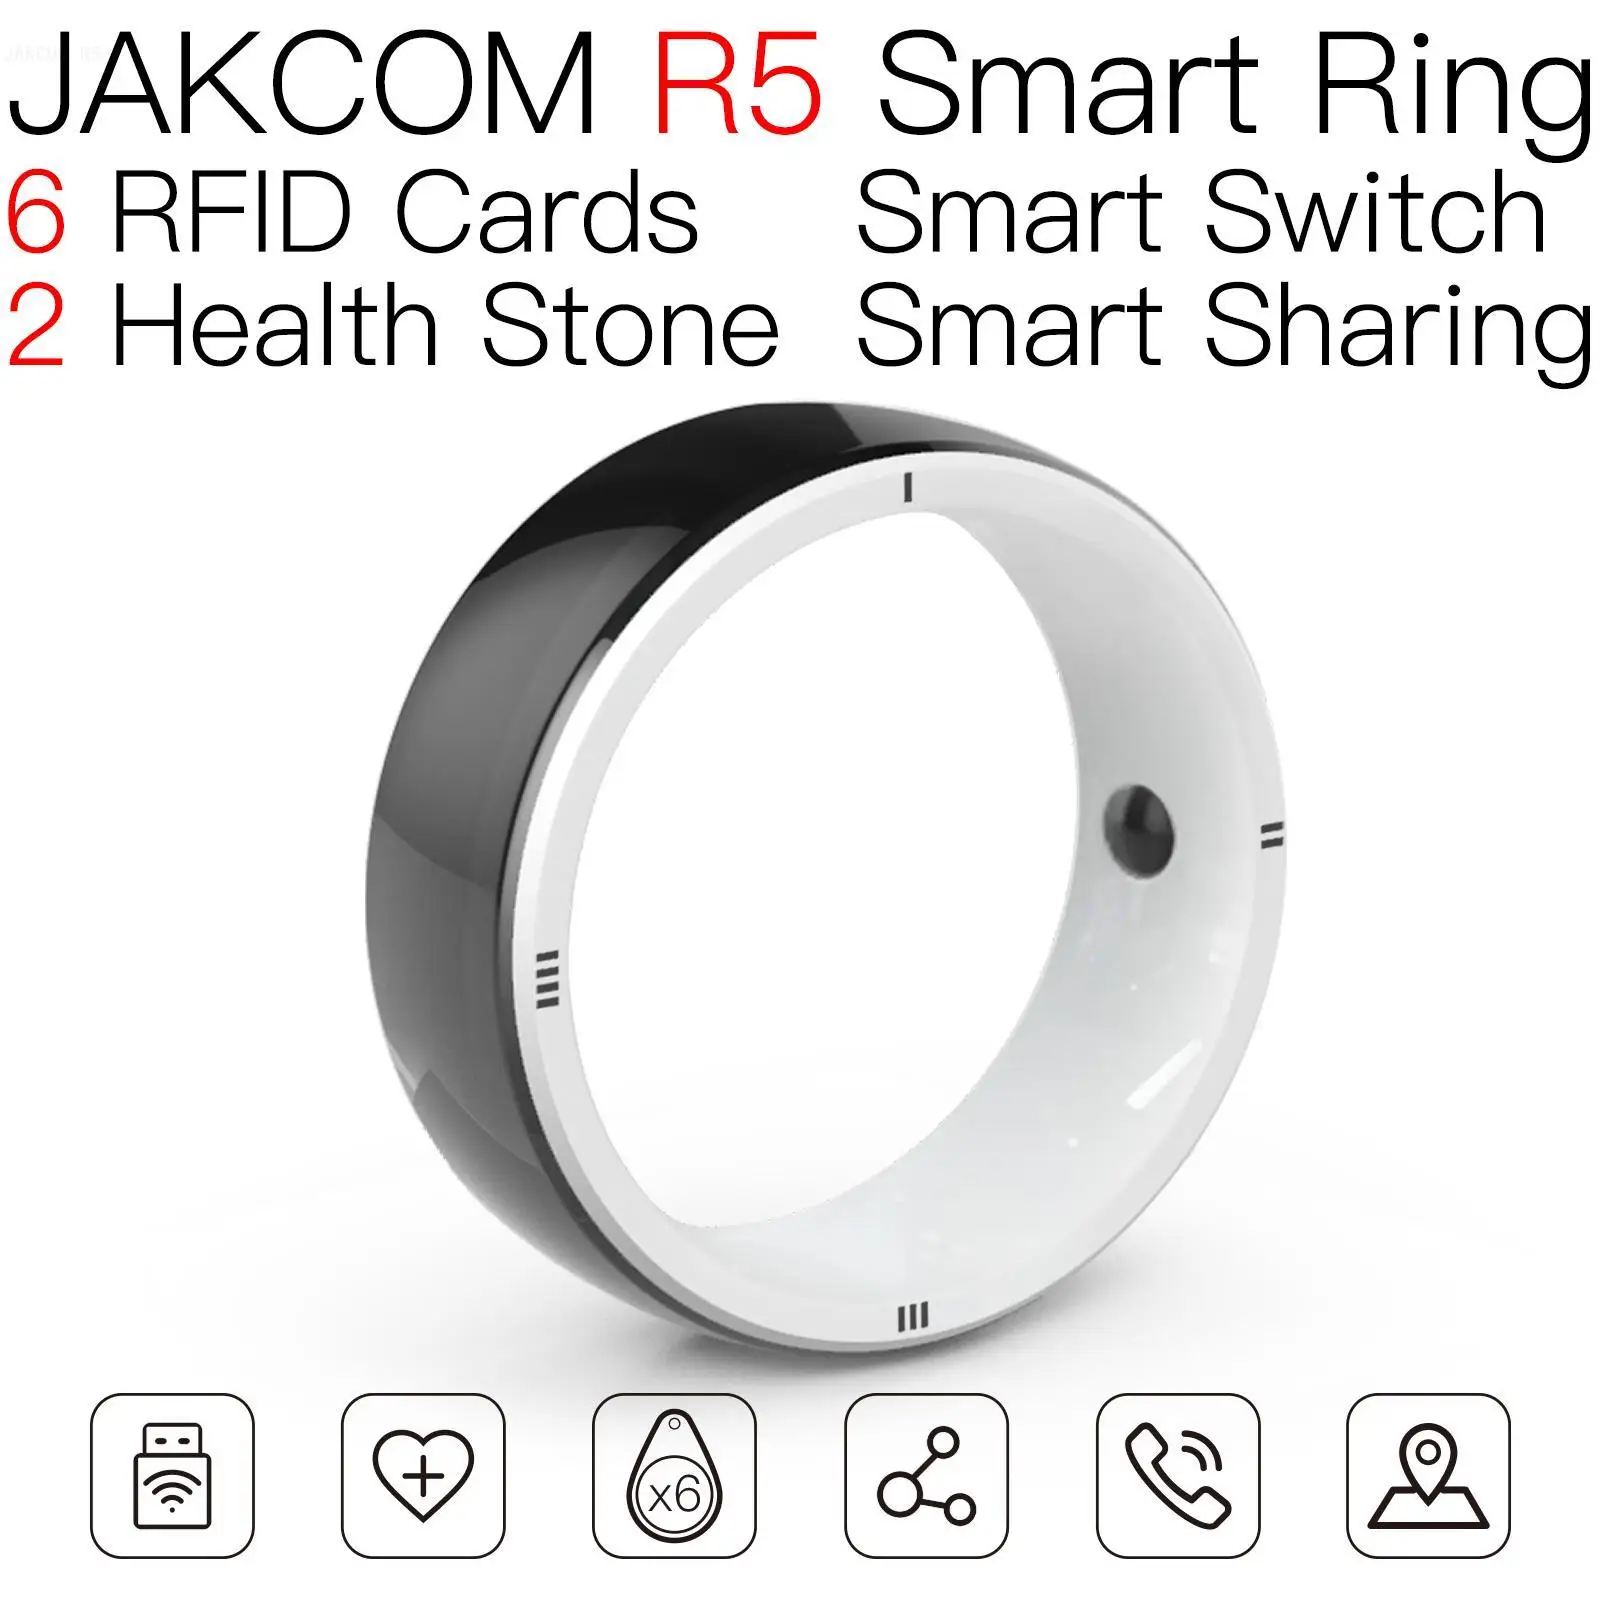 

JAKCOM R5 Smart Ring Super value than nfc card tag game rfid mini 125khz tags uhf write blank sticker labels payment key label